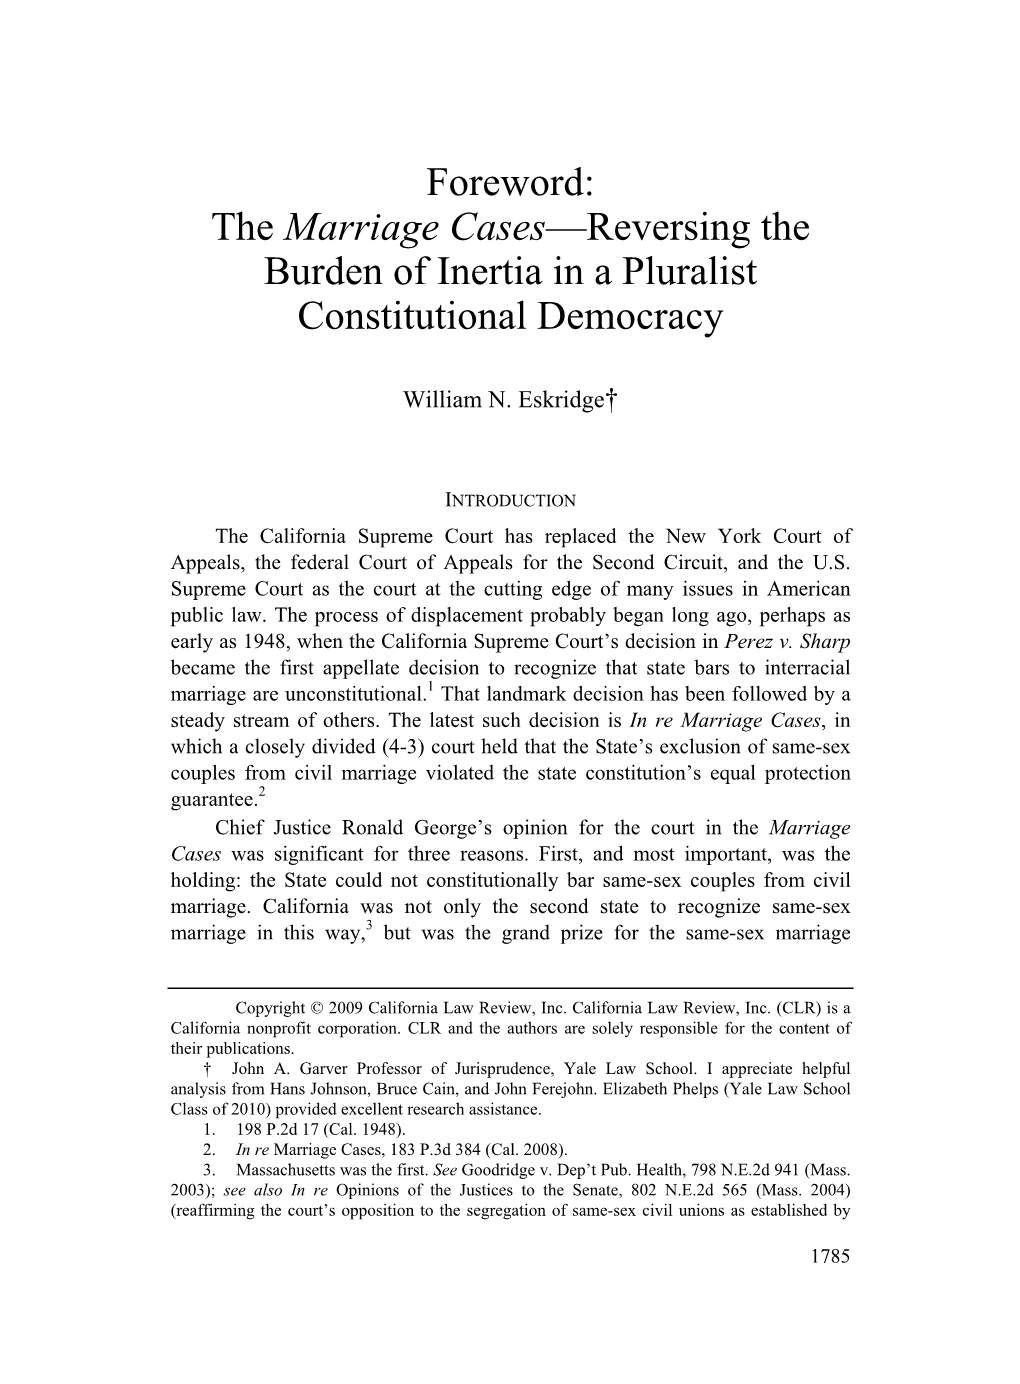 The Marriage Cases—Reversing the Burden of Inertia in a Pluralist Constitutional Democracy